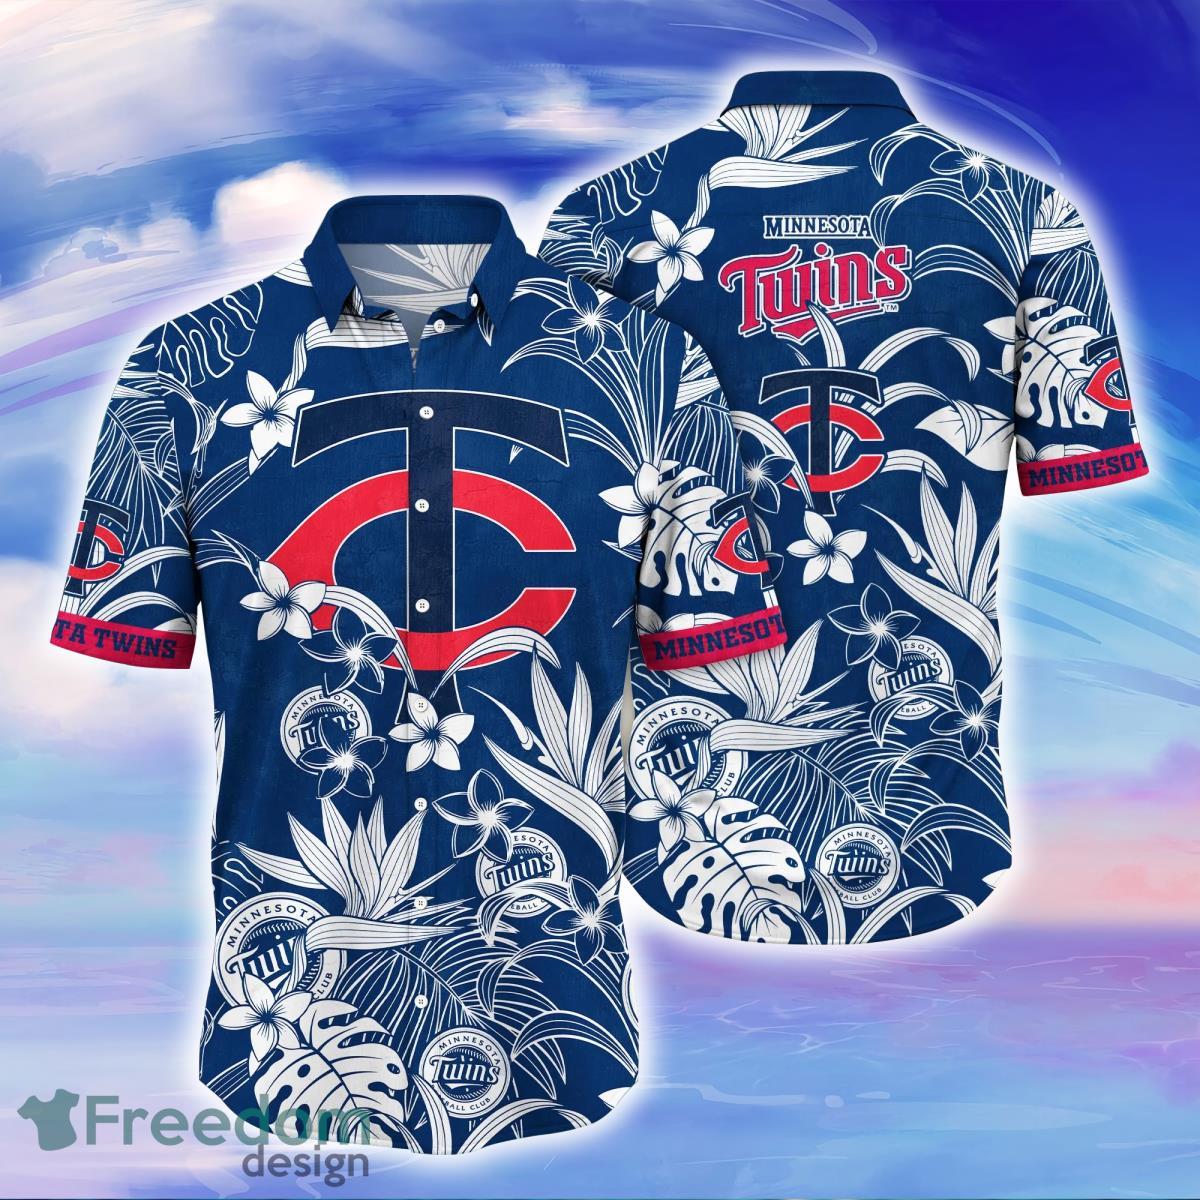 Minnesota Twins MLB Flower Hawaiian Shirt For Men Women Style Gift For Fans  - Freedomdesign